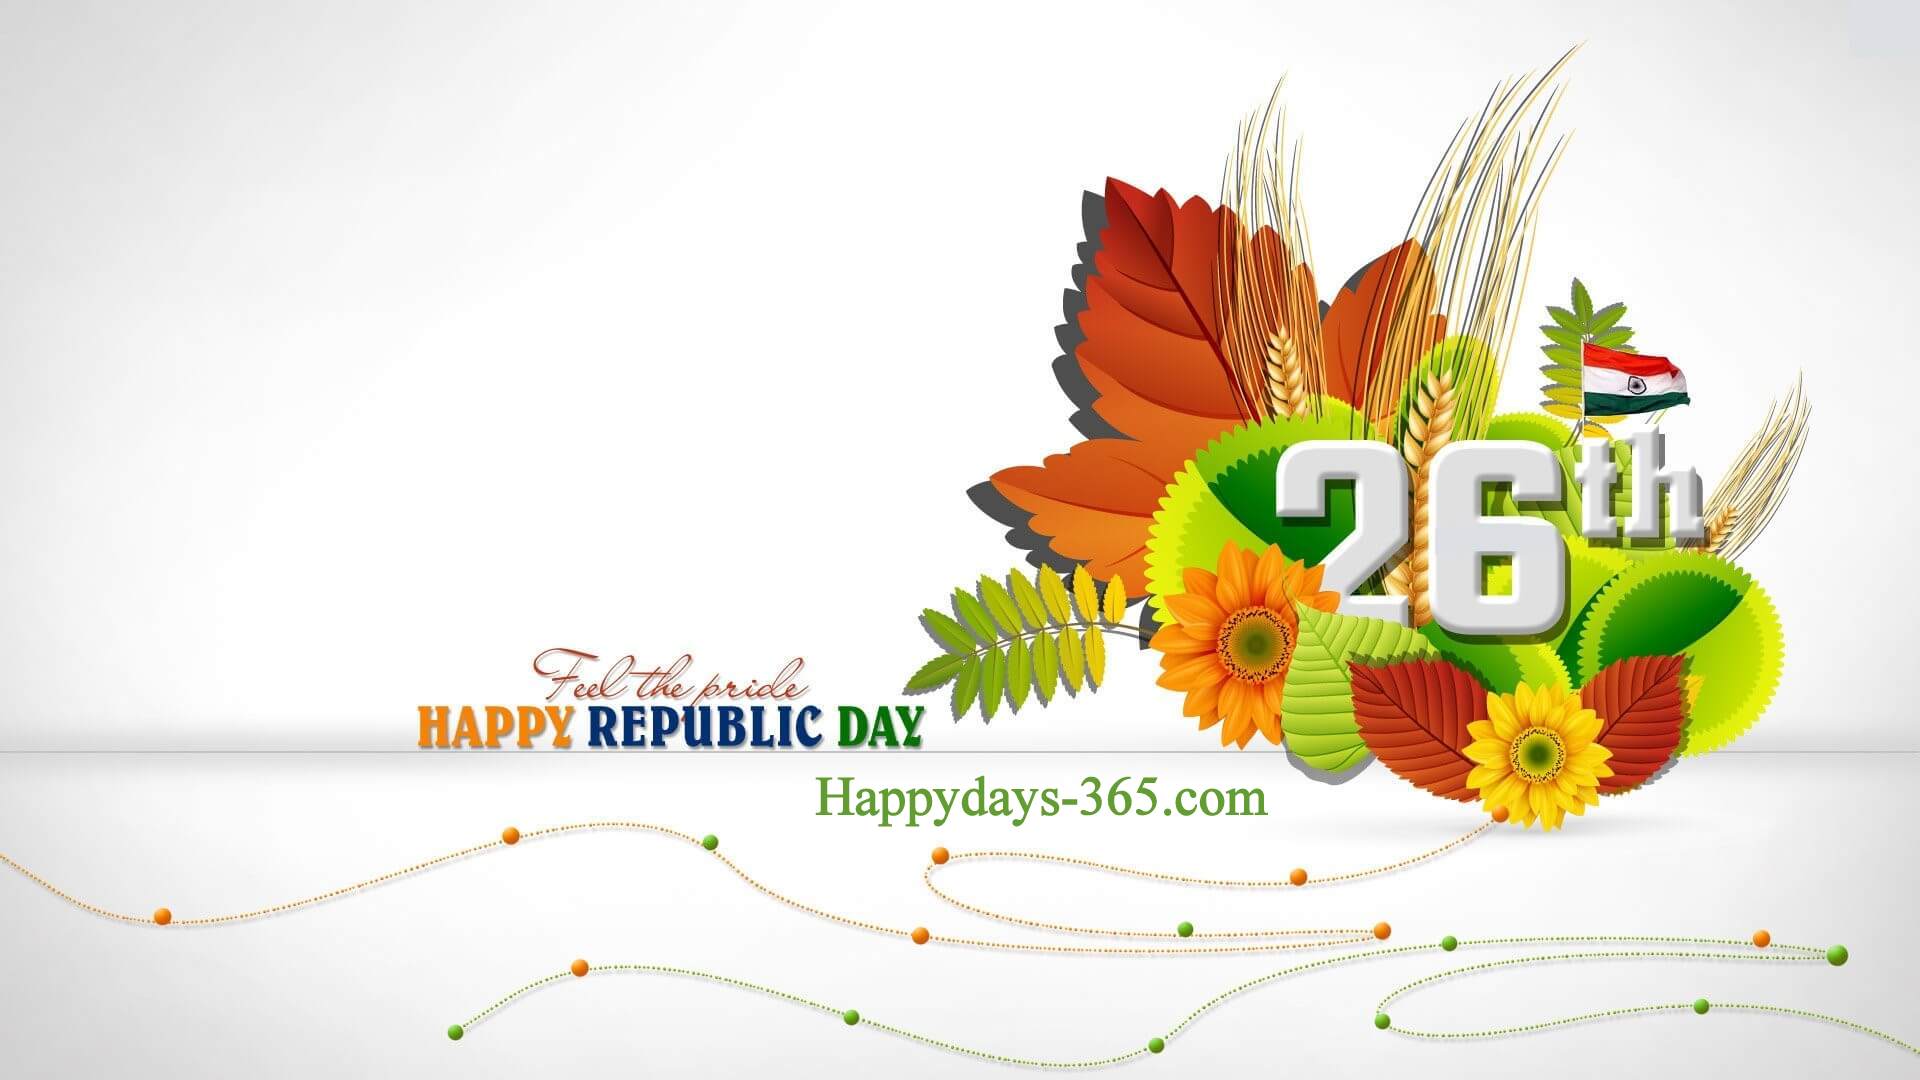 Happy Republic Day in India 2020. Happy Days 365